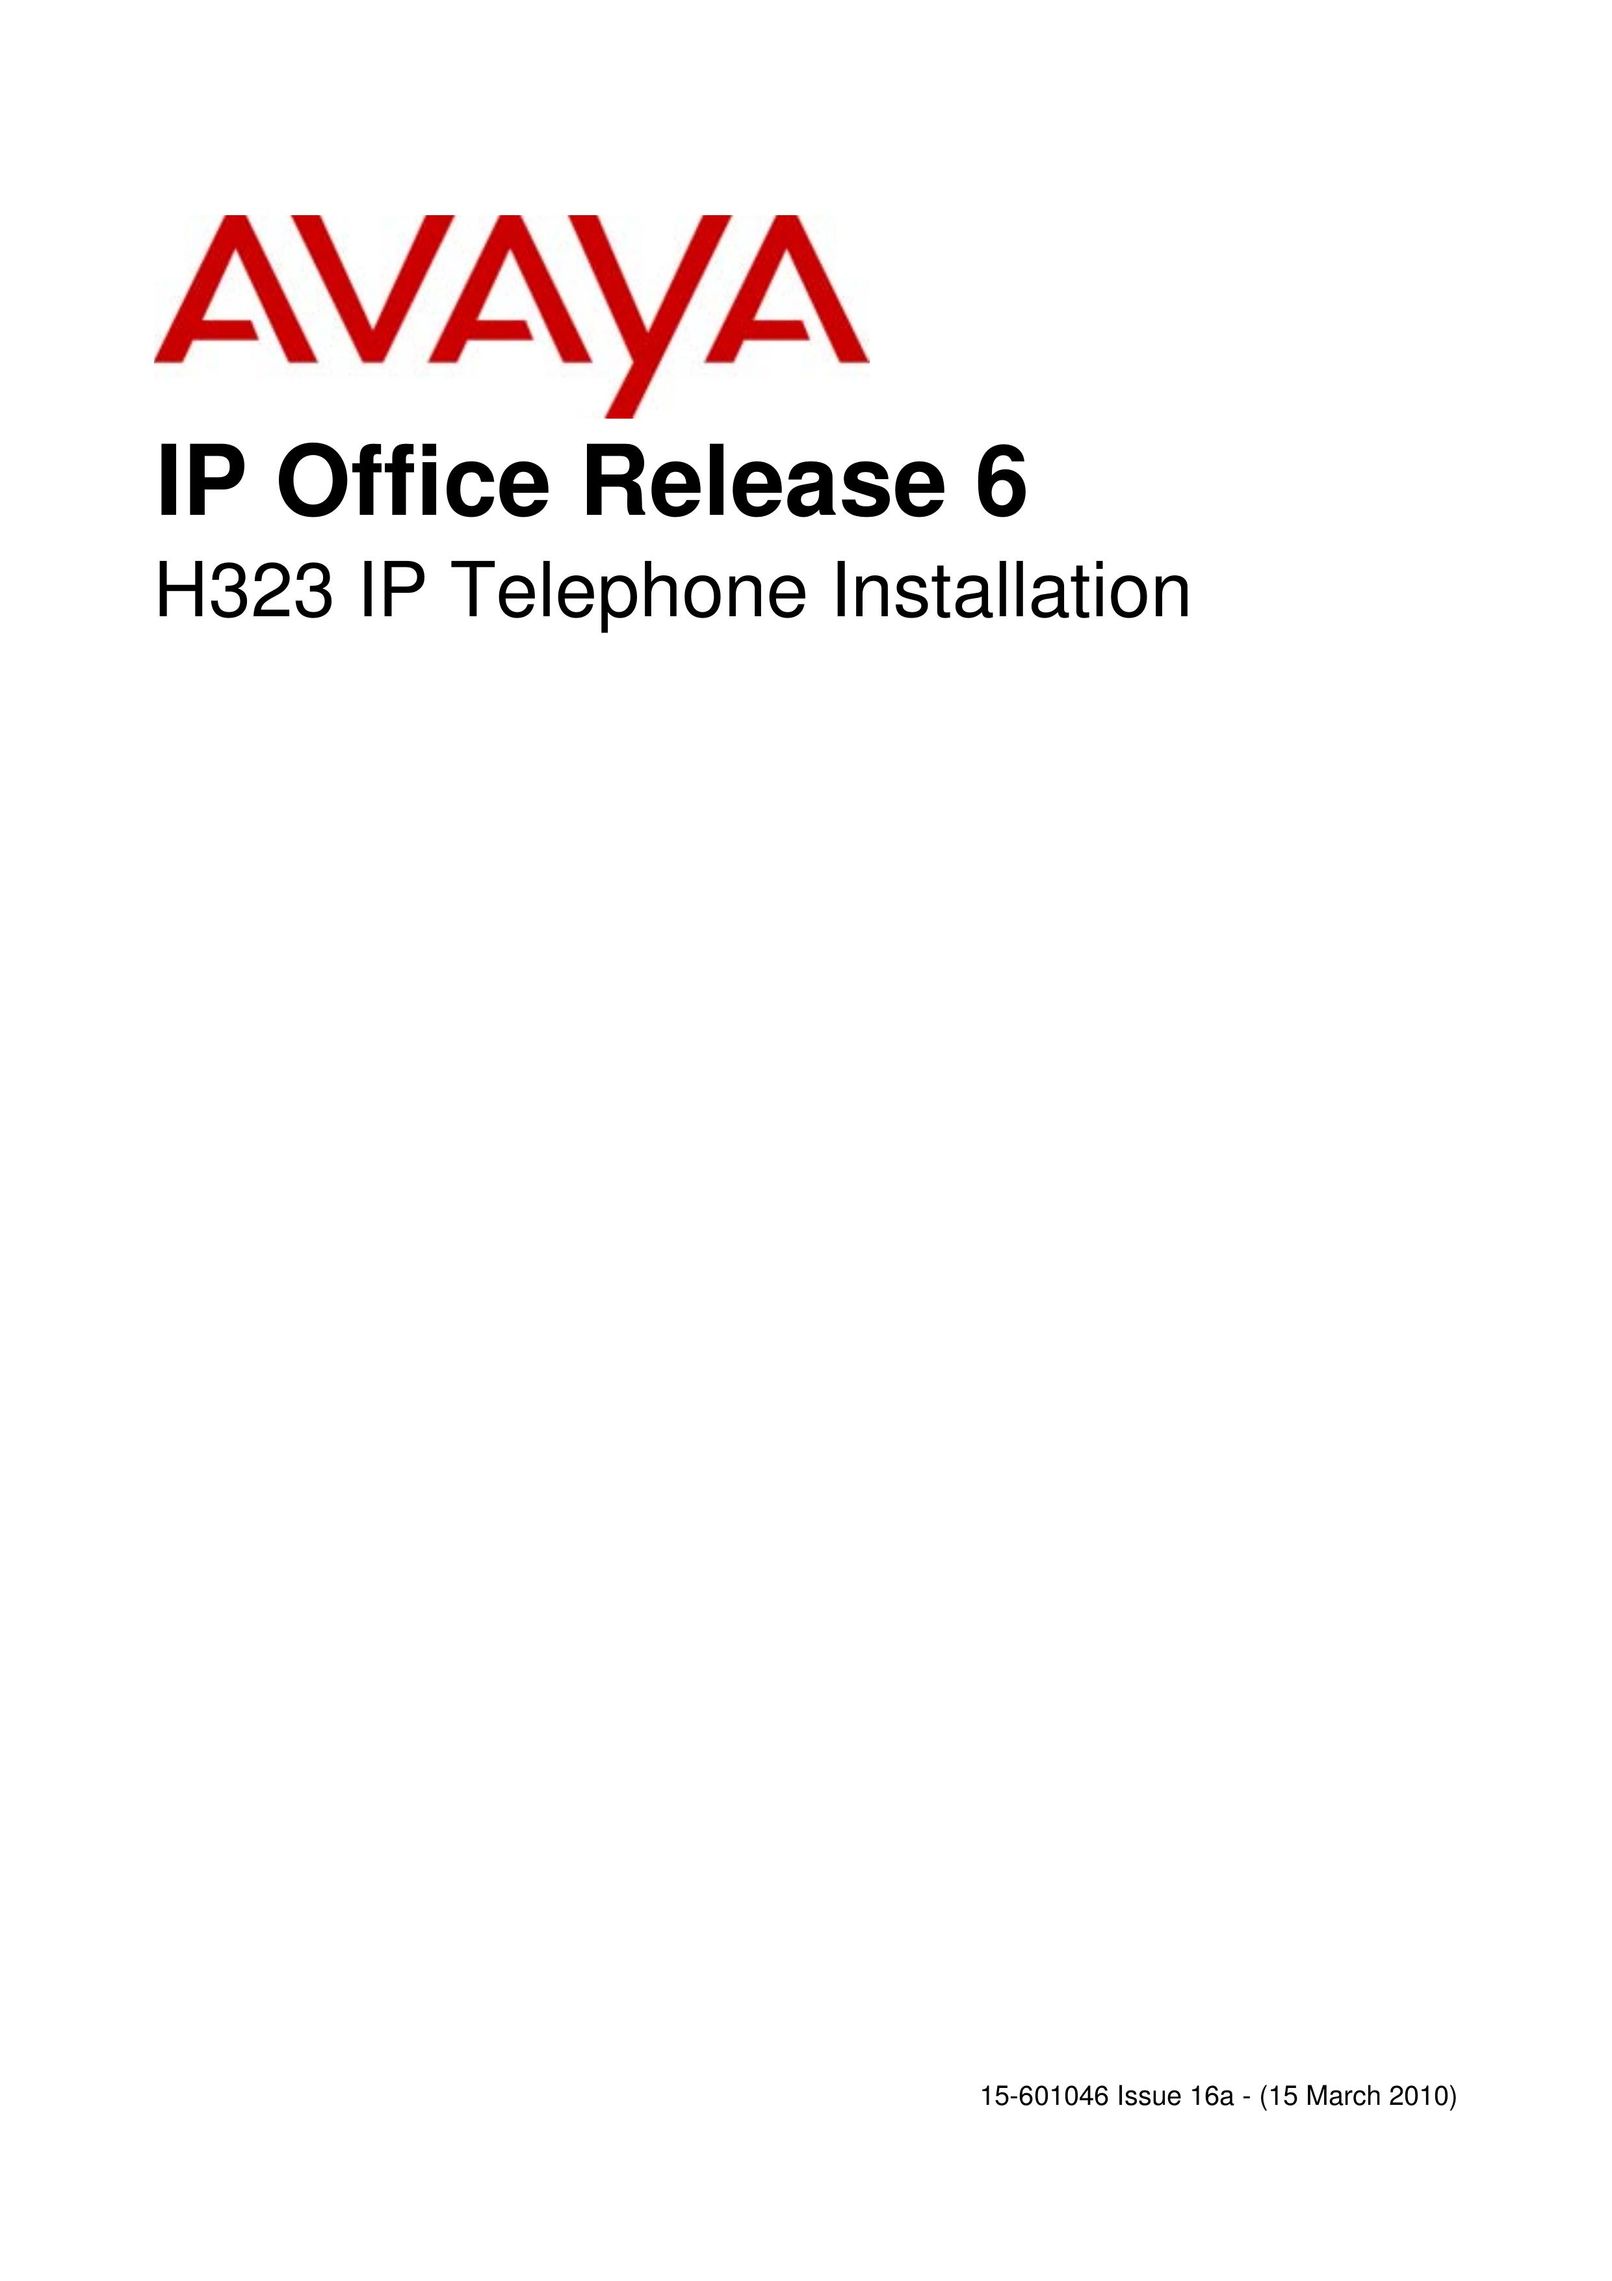 Canon H323 IP Phone User Manual